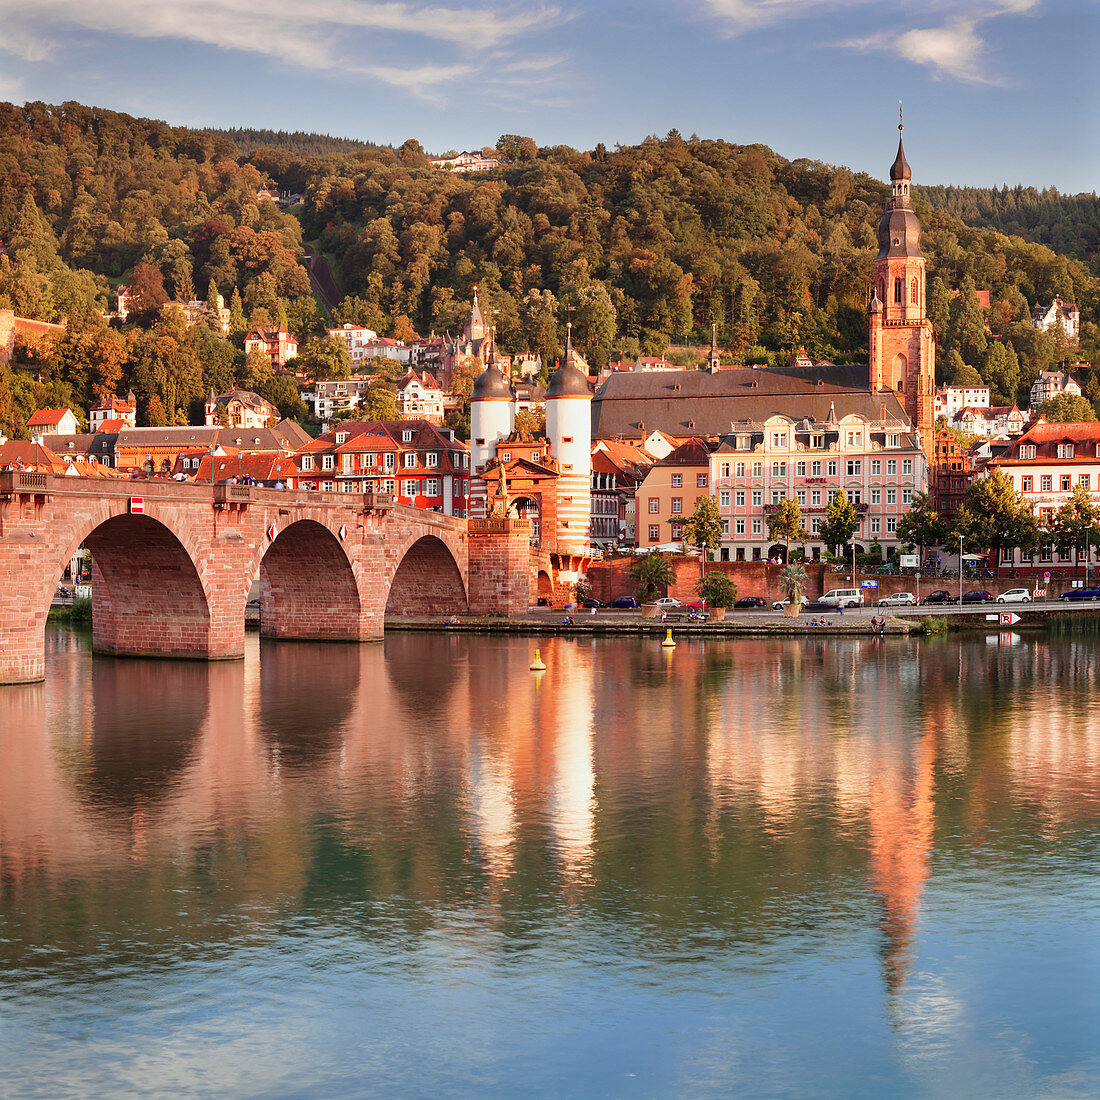 Old town with Karl-Theodor-Bridge (Old Bridge) and Castle, Neckar River, Heidelberg, Baden-Wurttemberg, Germany, Europe